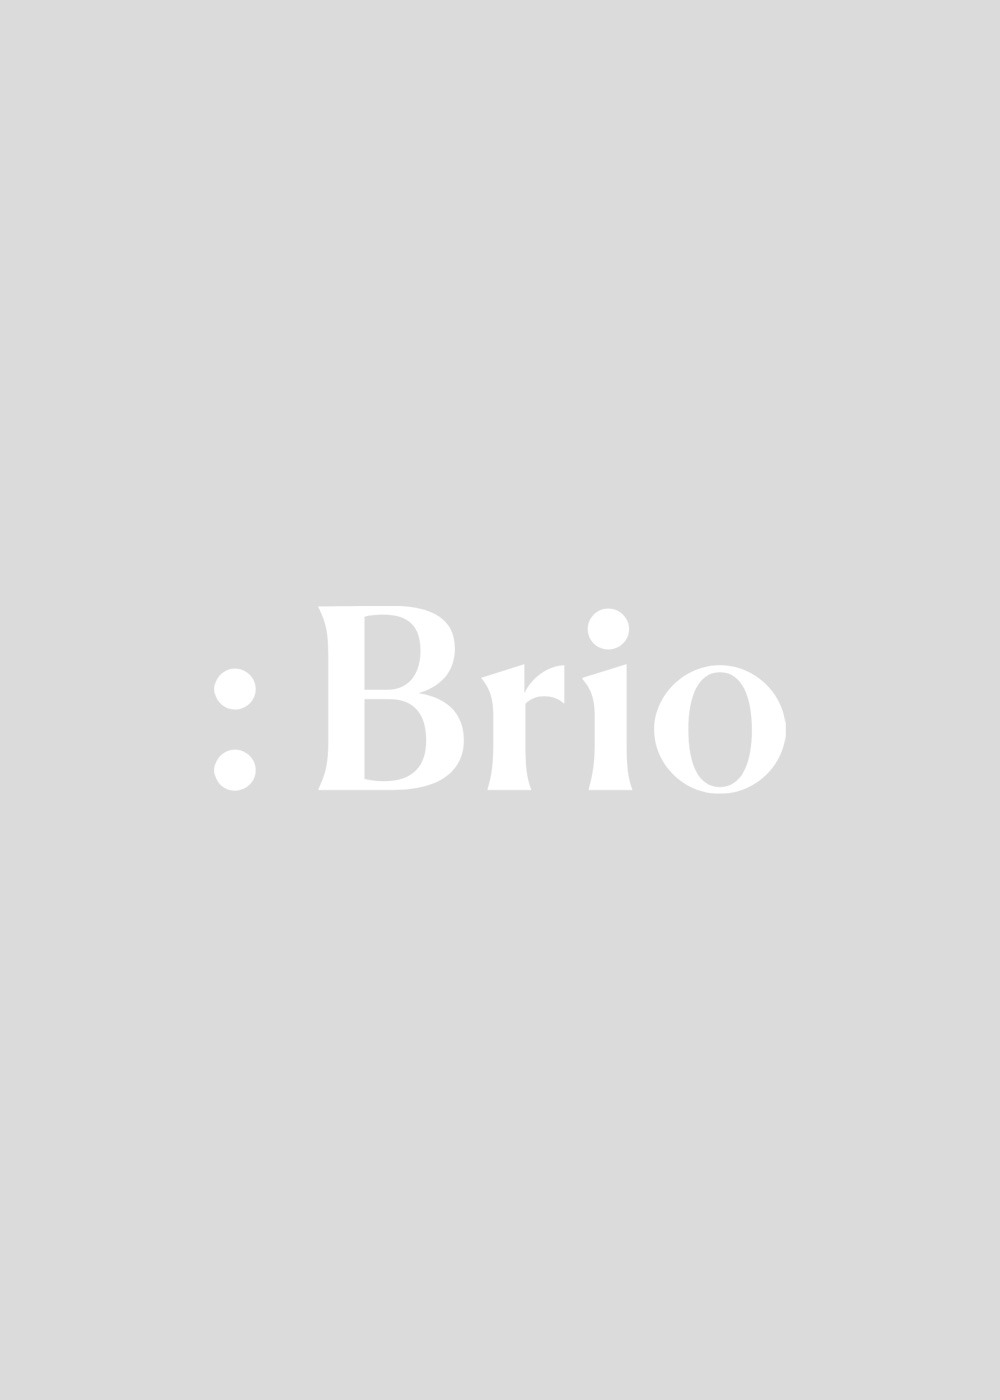 Brio placeholder